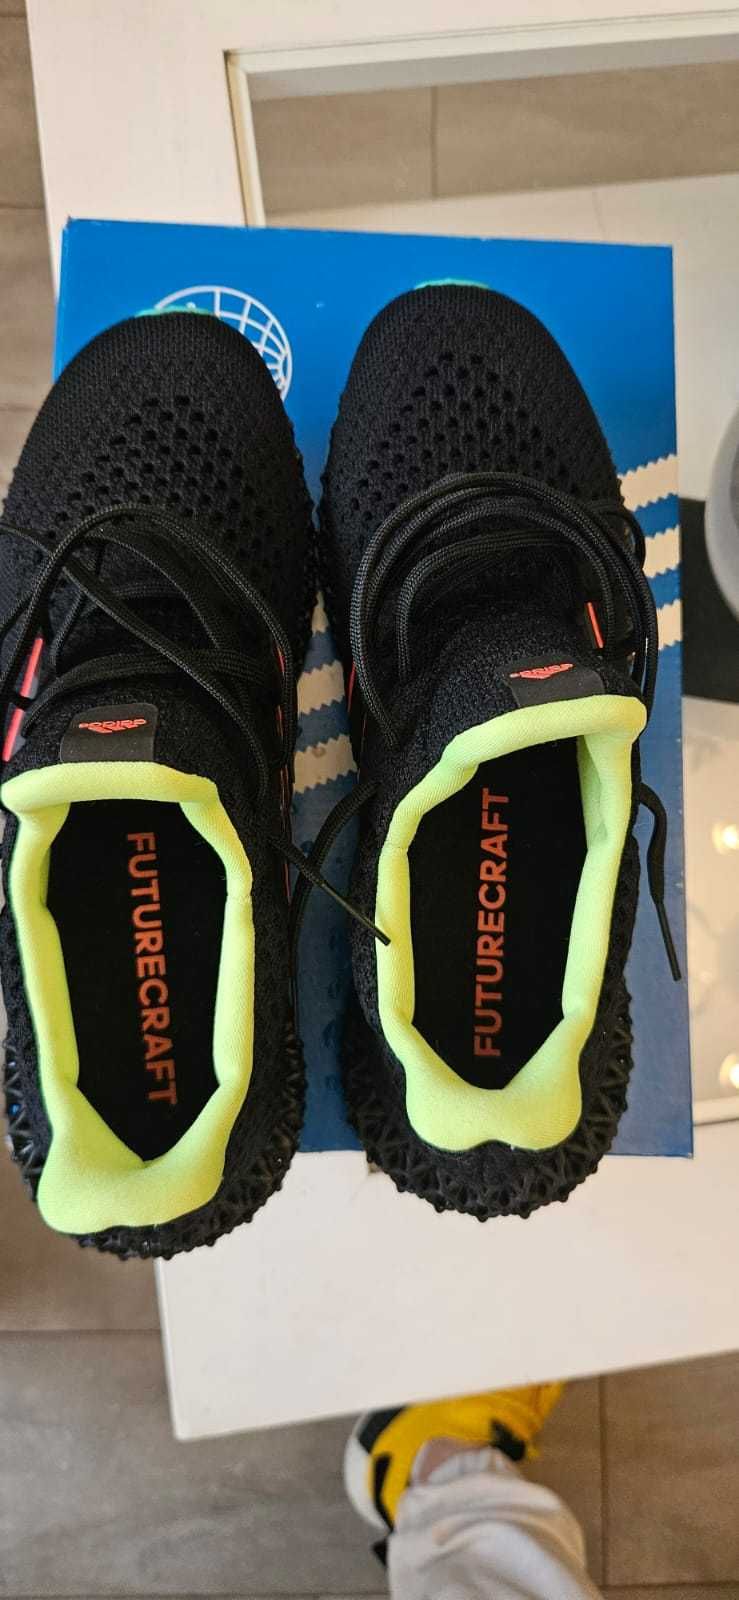 adidas Futurecraft 4D "Black/Neon" sneakers, marime 39 1/3